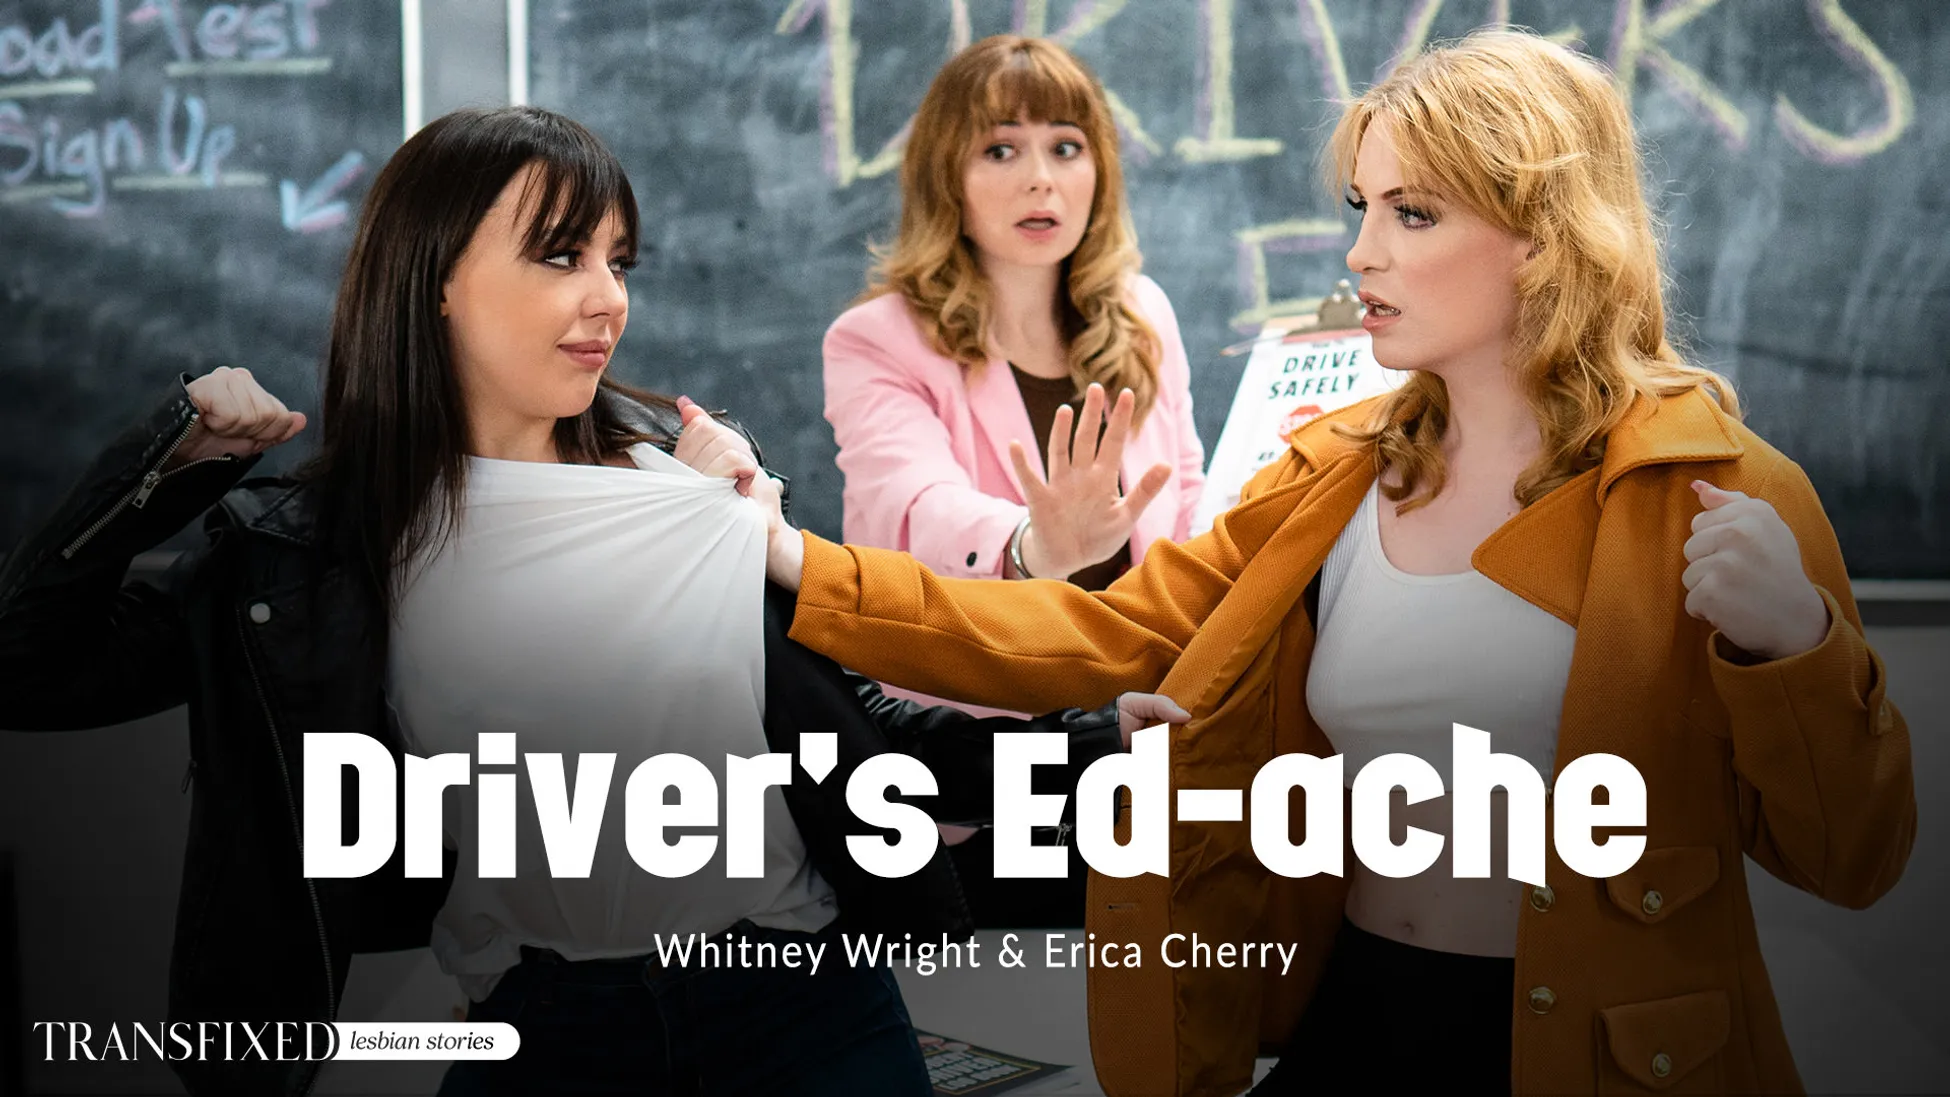 Transfixed Whitney Wright & Erica Cherry - Driver's Ed-ache - UpdatesZ